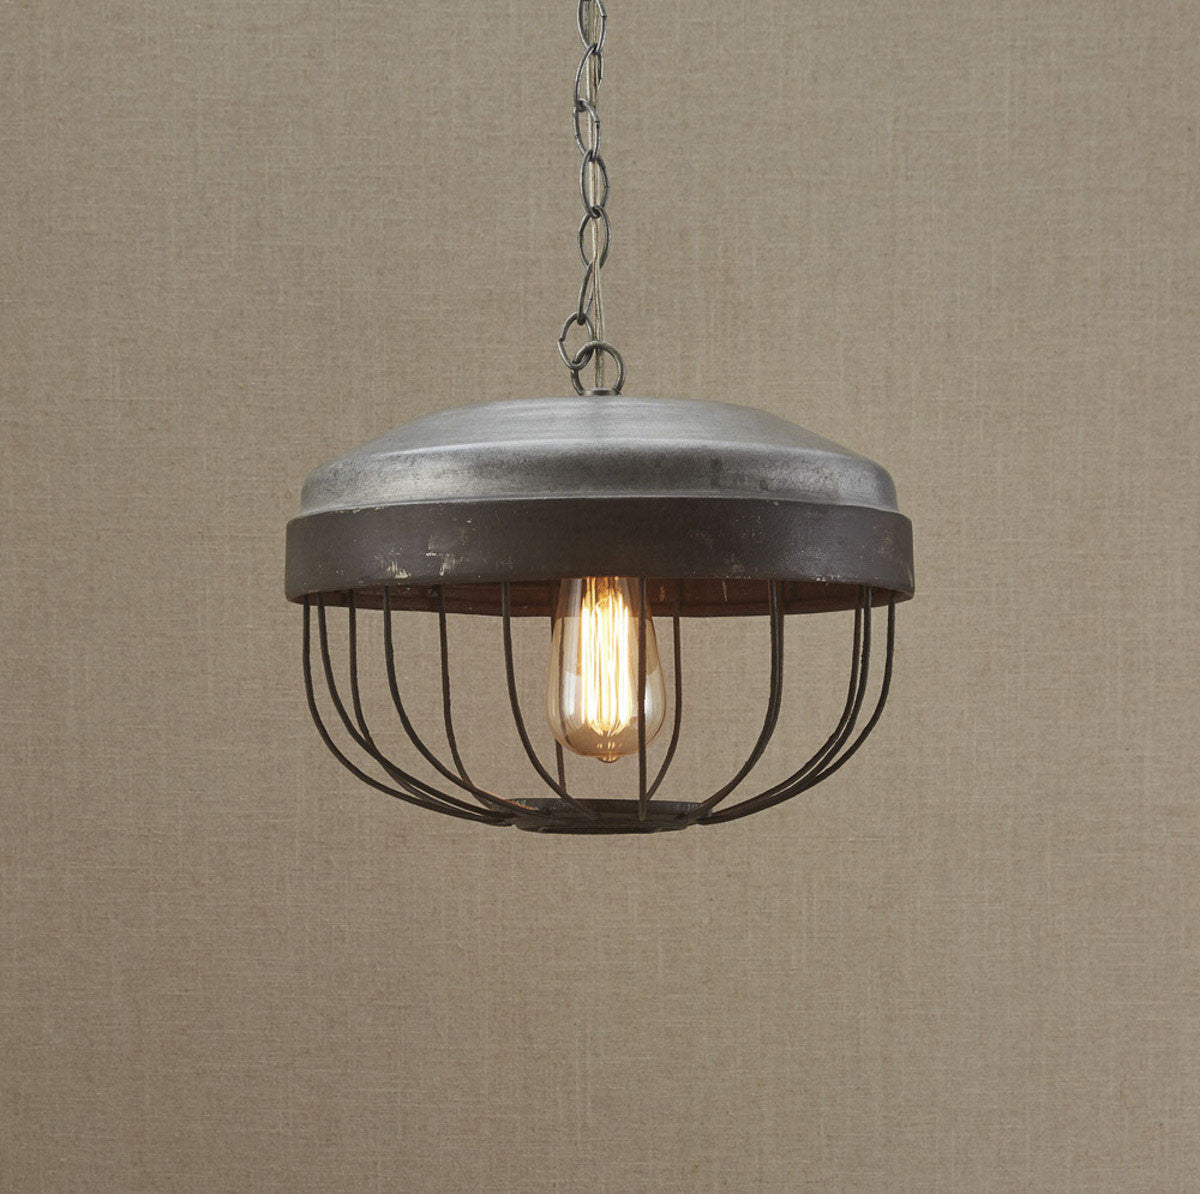 Hanging Chicken Feeder Pendant Light Lamp - Park Designs